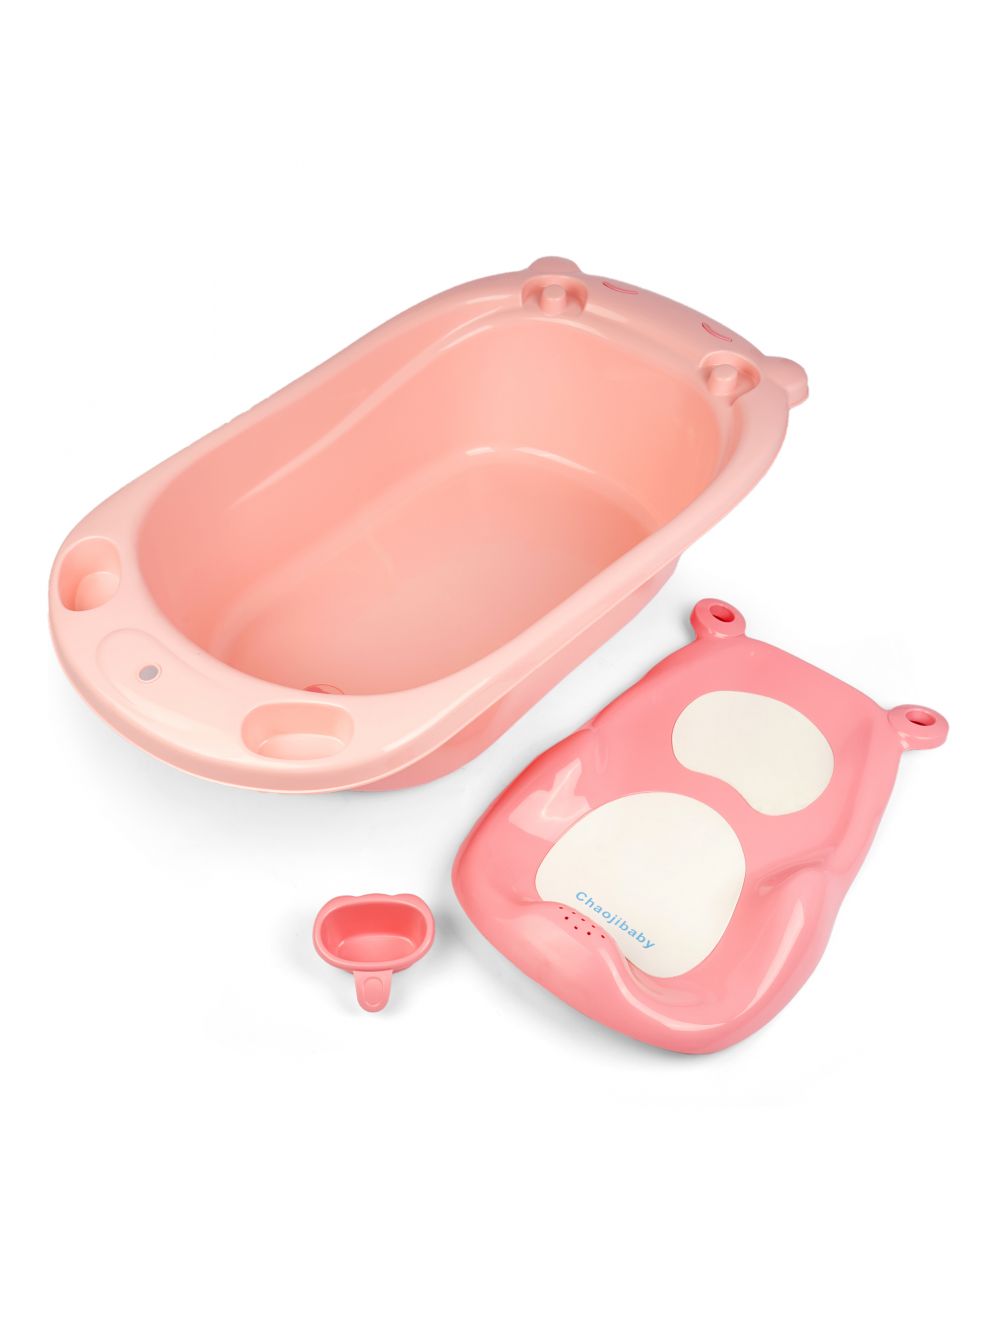 Joymaker Baby Bathtub Pink